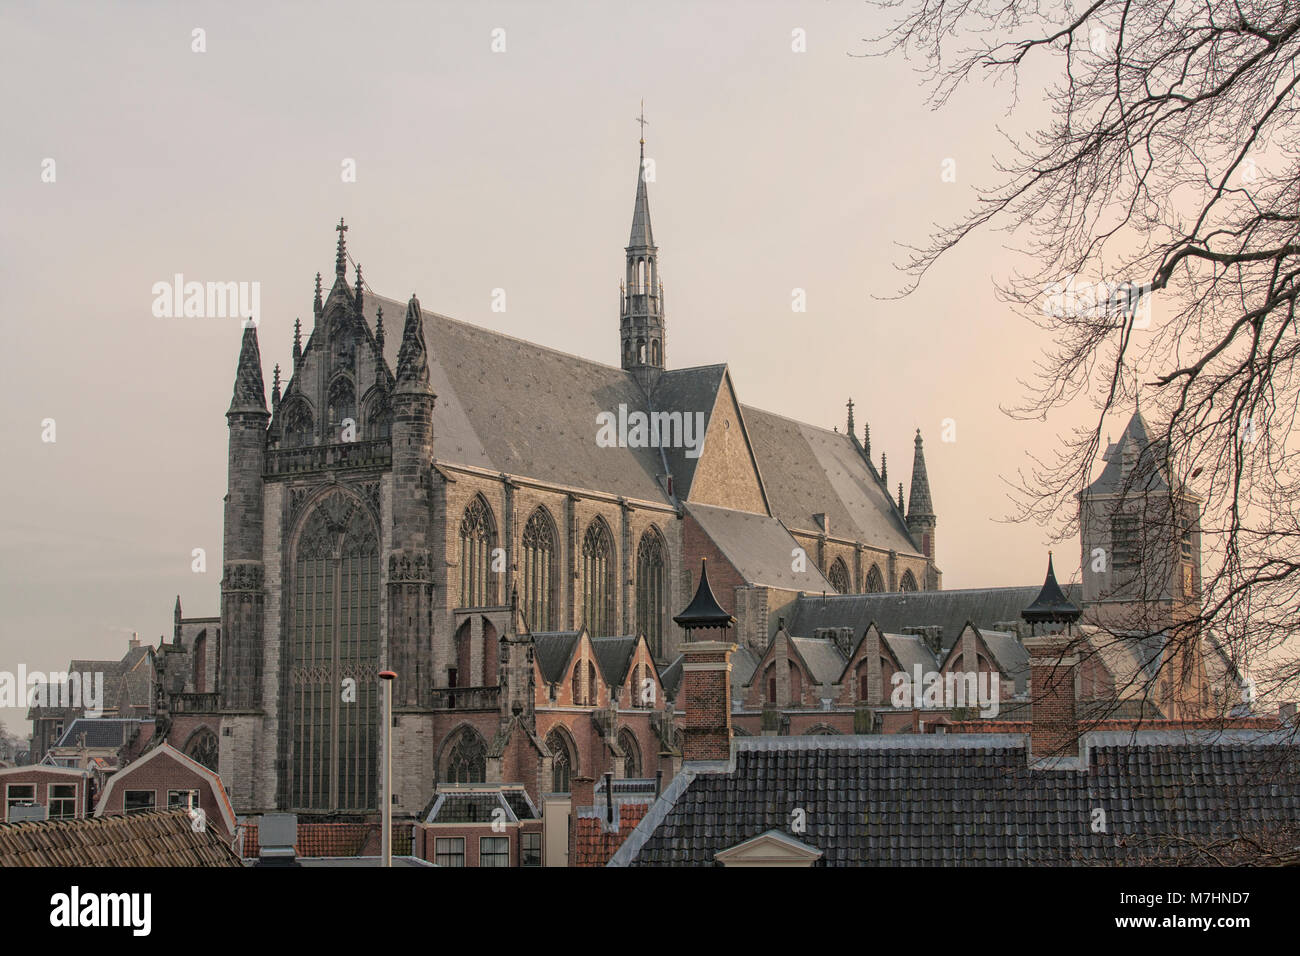 Hooglandse Kerk è una chiesa gotica in Leiden risalente al XV secolo. La chiesa di mattoni è dedicata a San Pancrazio. Paesi Bassi Foto Stock